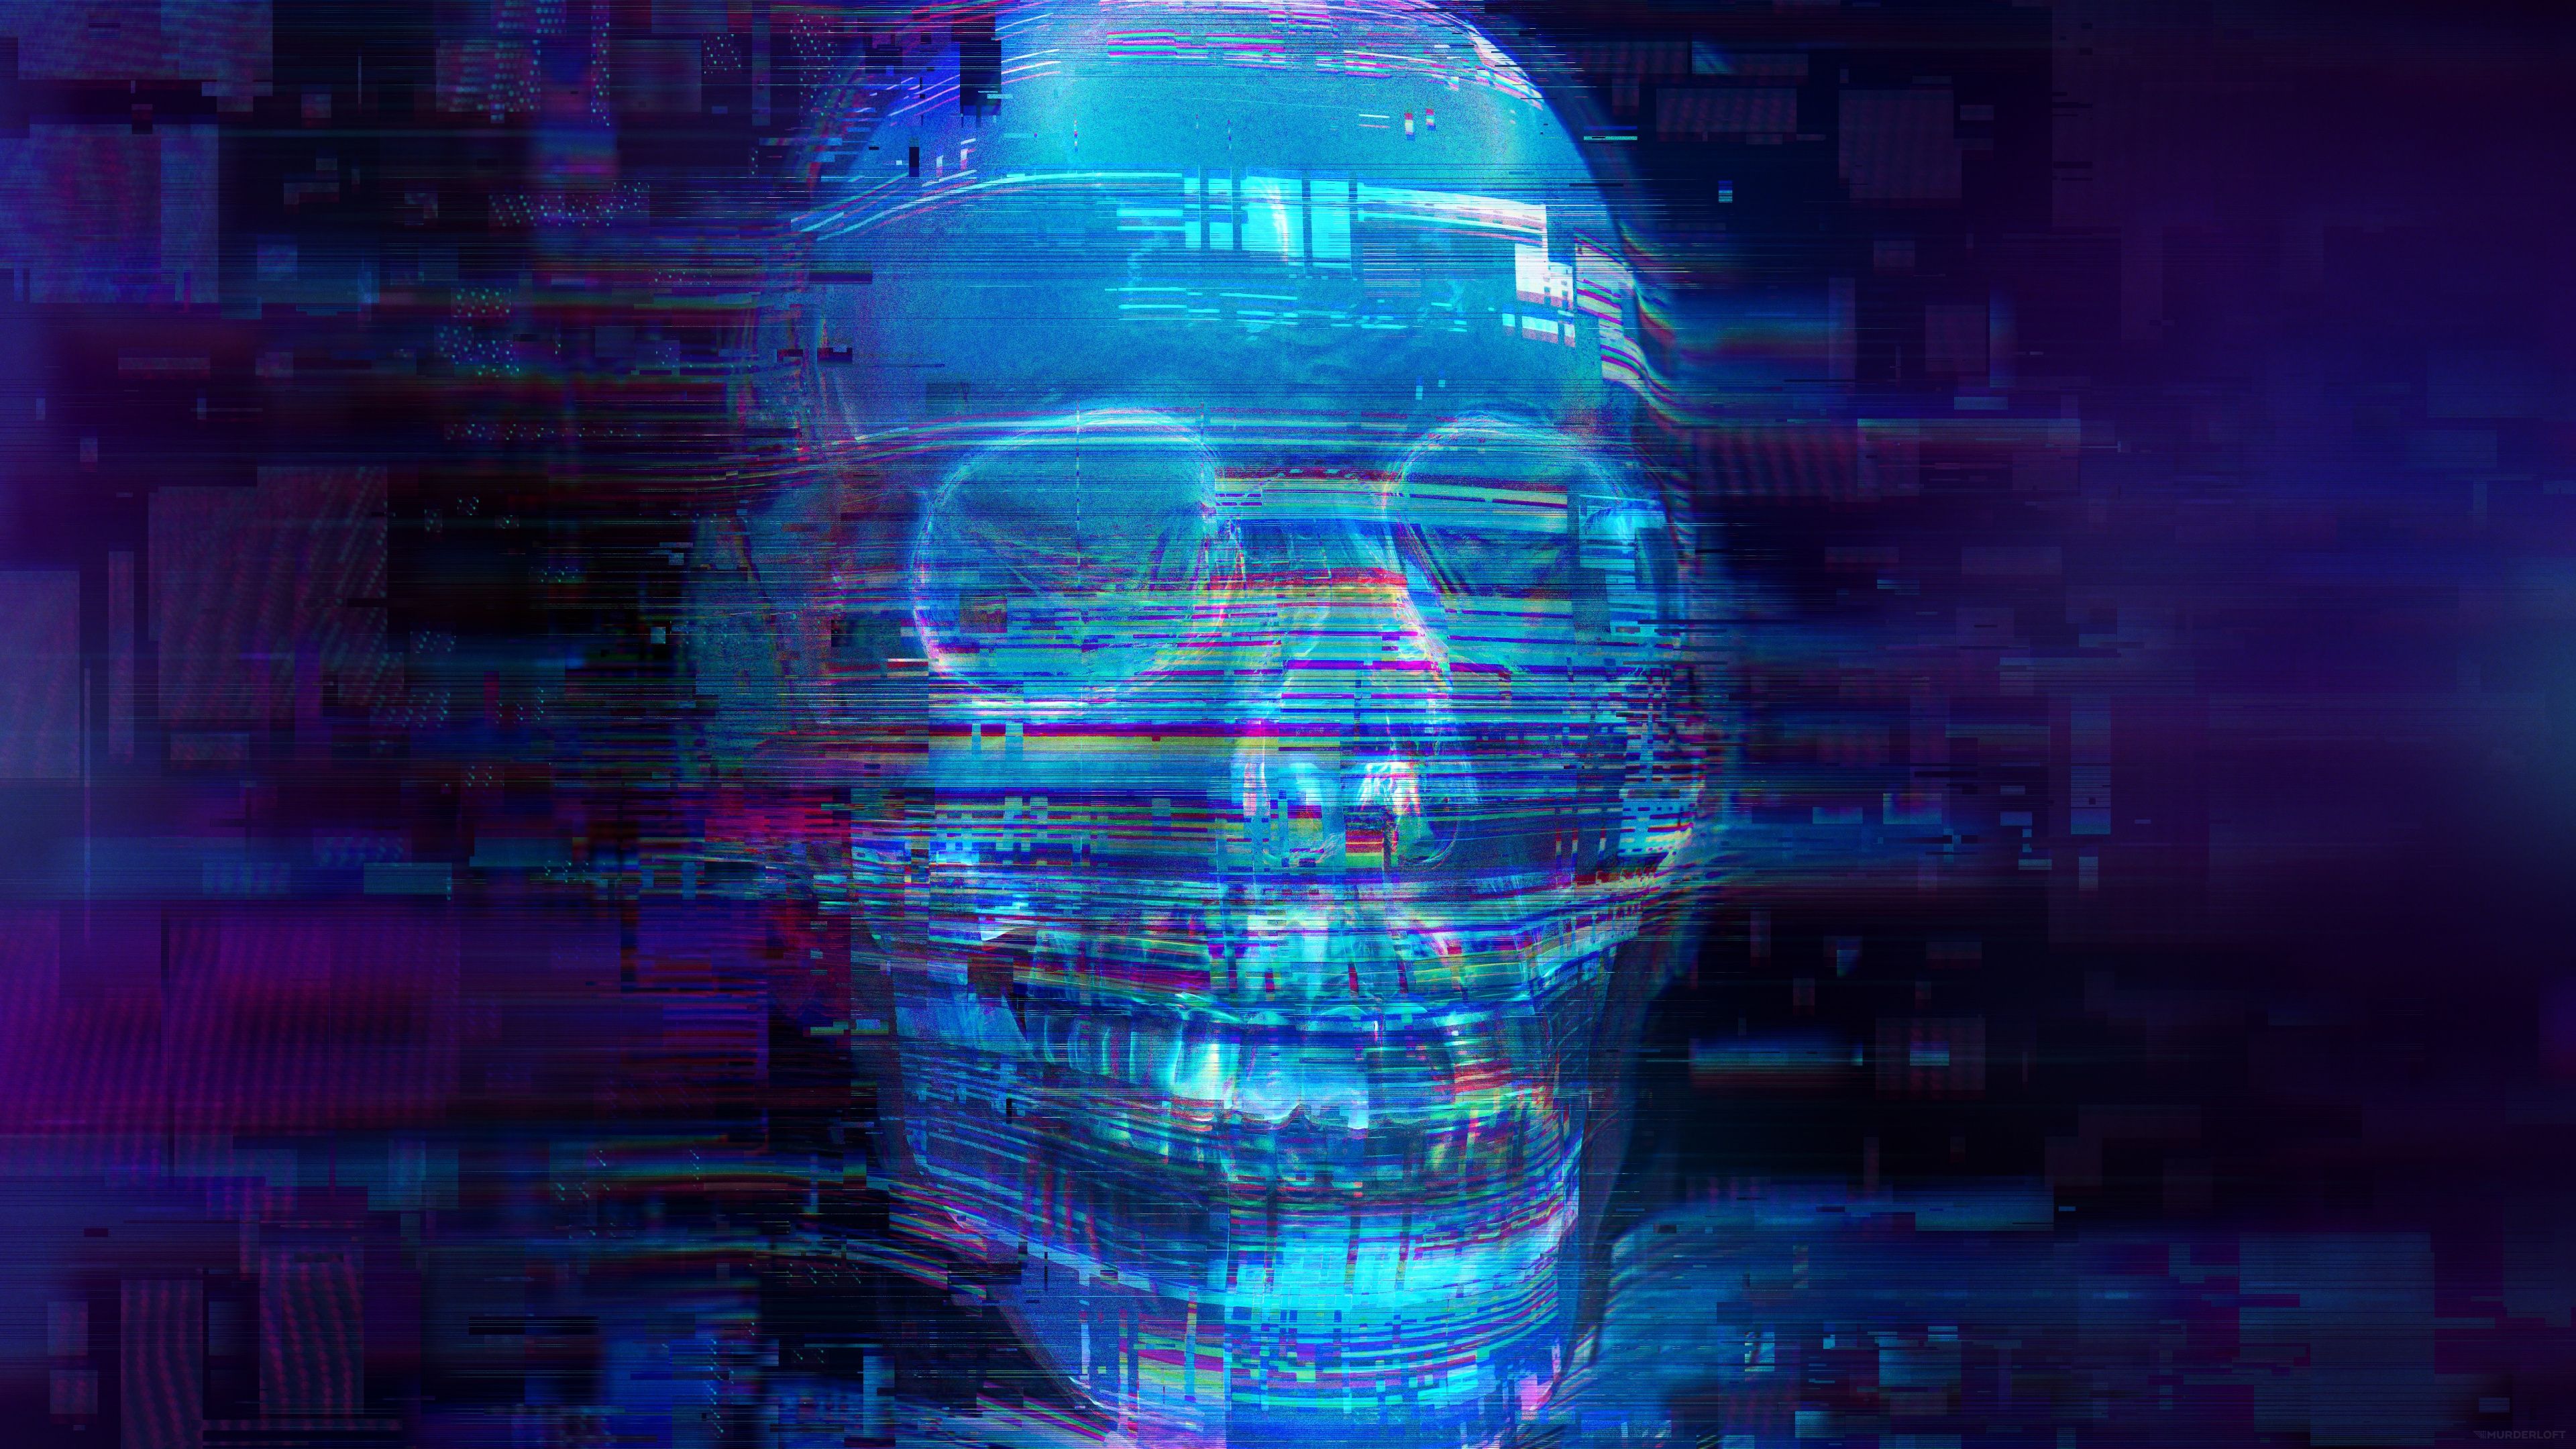 Download Skull, fear, glitch art, neon blue wallpaper, 3840x 4K UHD 16: Widescreen